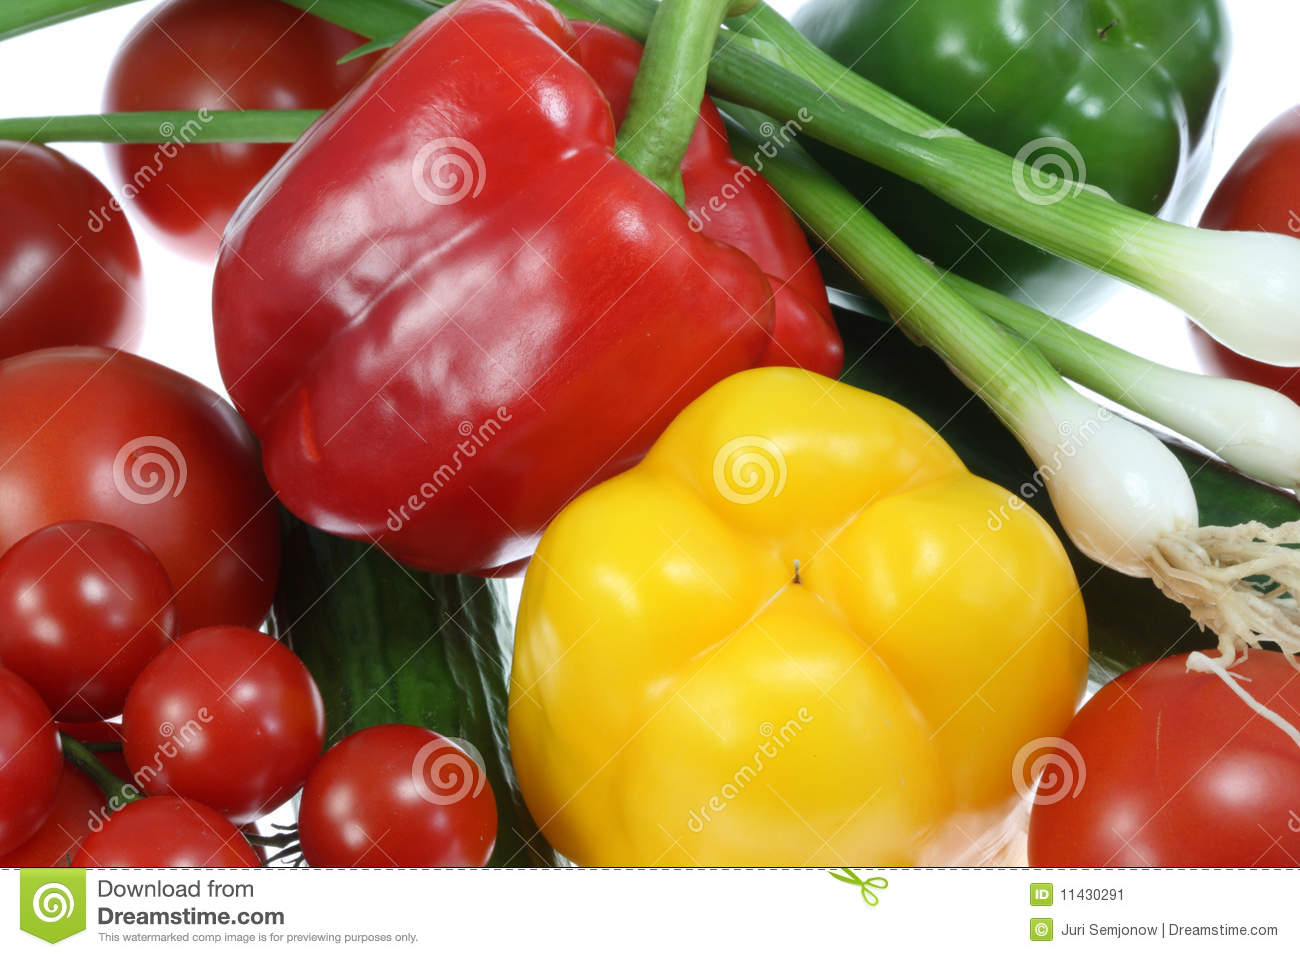 Fresh Summer Vegetables  Stock Image   Image  11430291